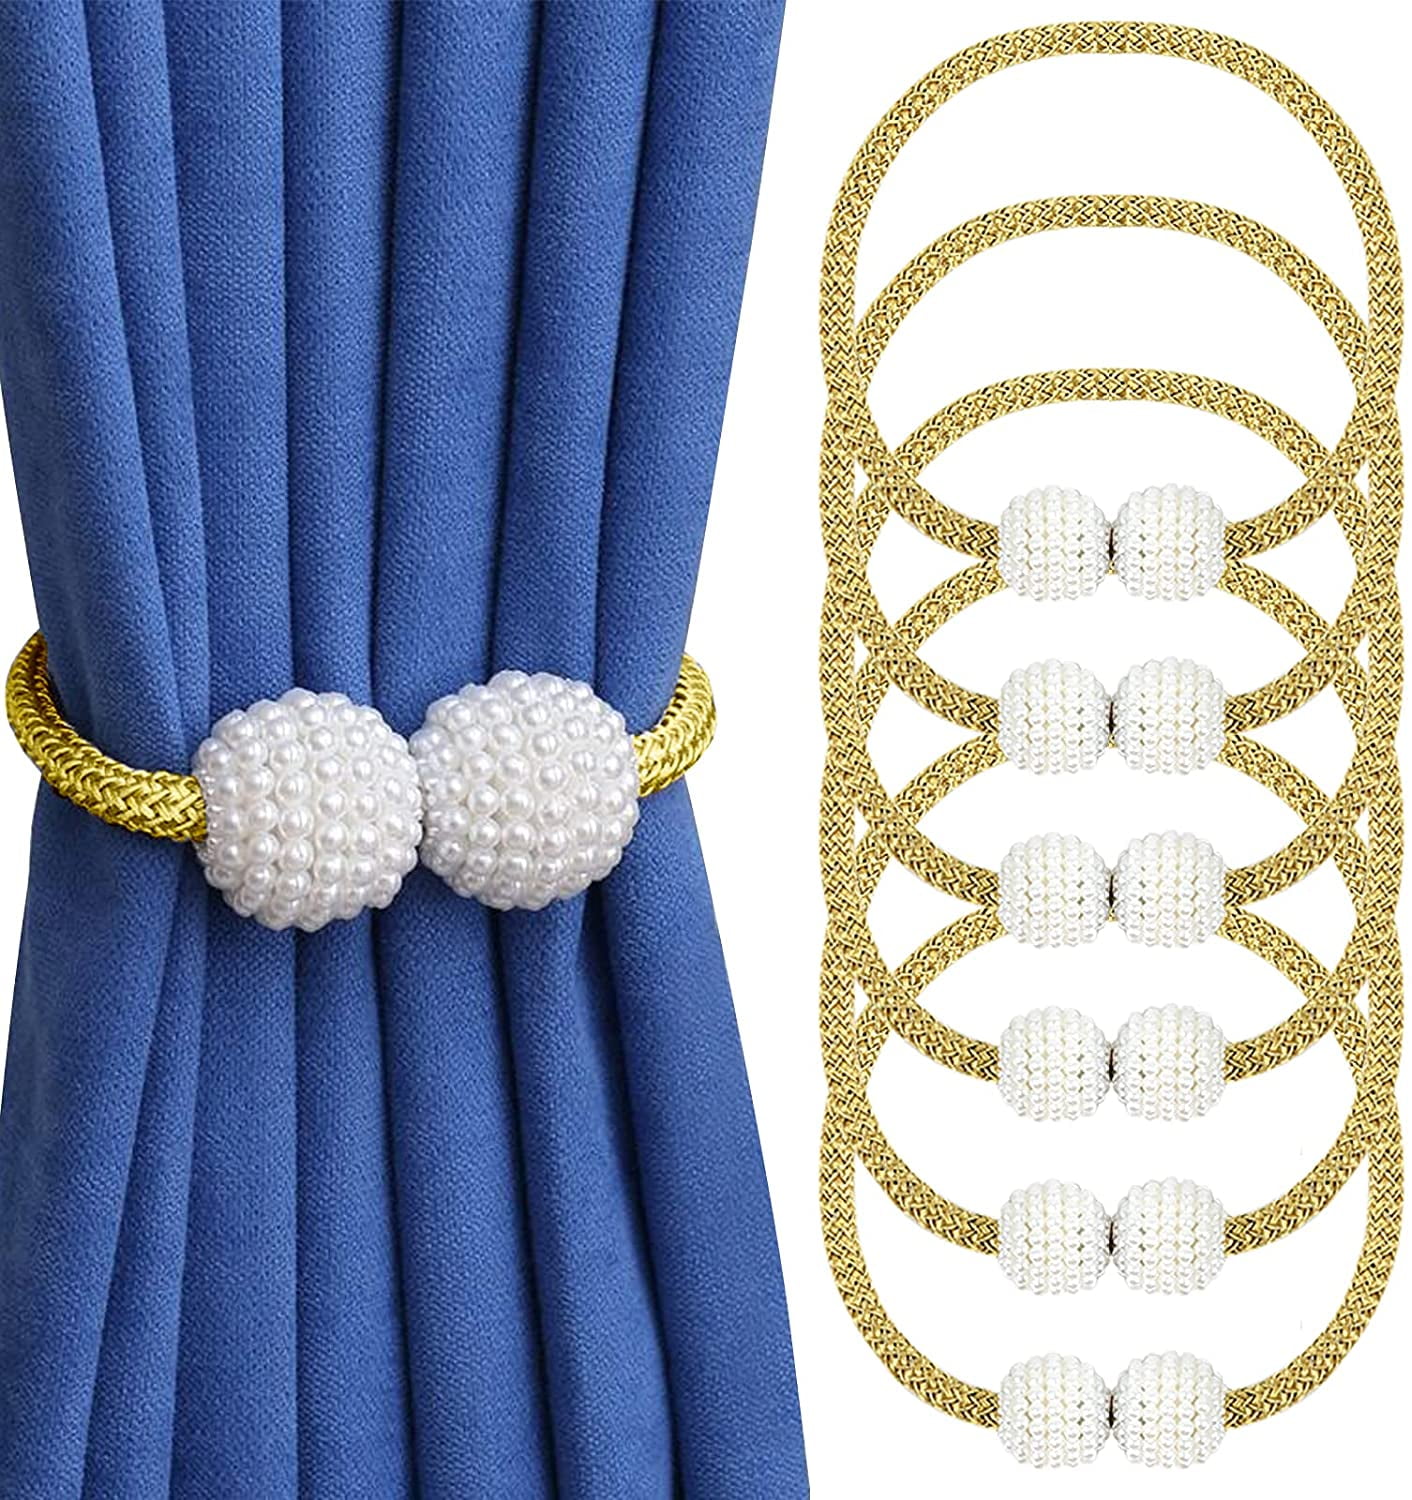 magnetic curtain strap buckle holder pearl beads tiebacks tie backs clips HI 